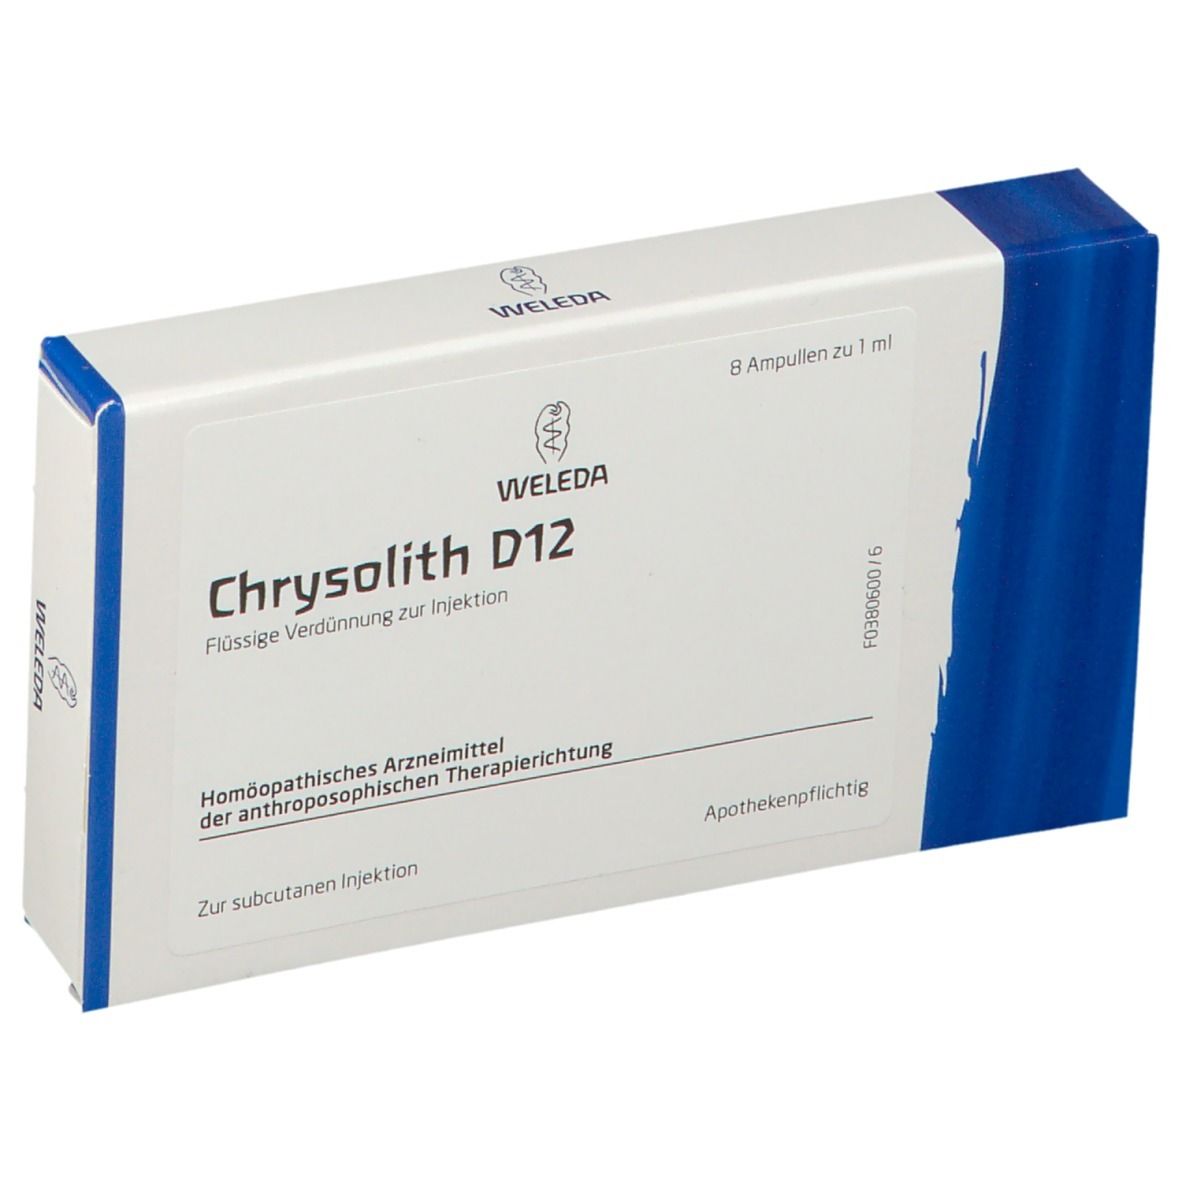 Chrysolith D12 Ampullen